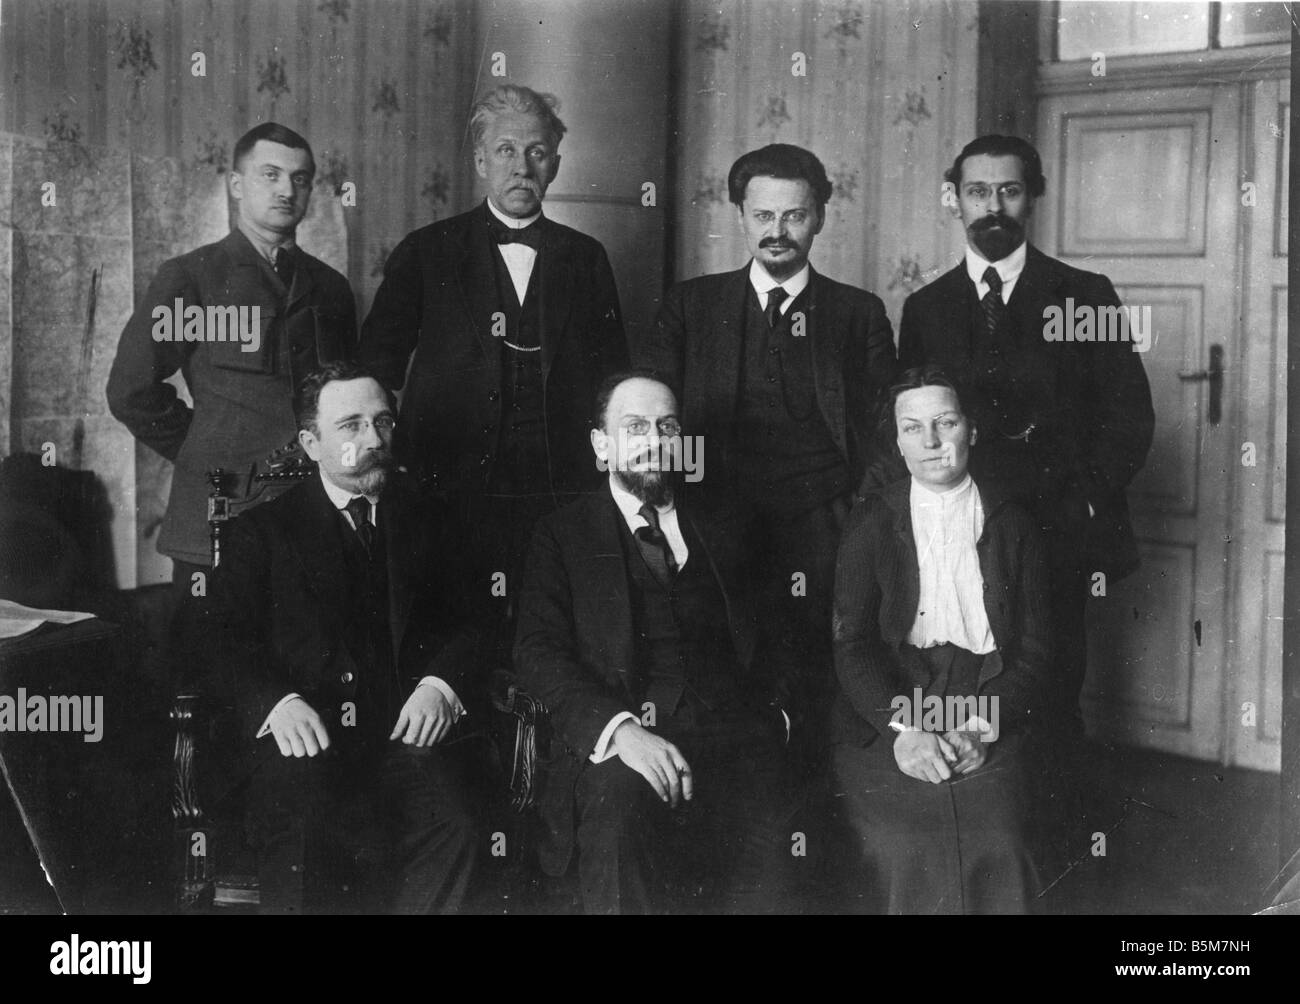 1RD 234 F1917 Trotzky Kamenew Joffe Foto c 1917 Trotzky Leon Davidovich russischer revolutionär und Politiker 1879 1940 Trotzky Stockfoto